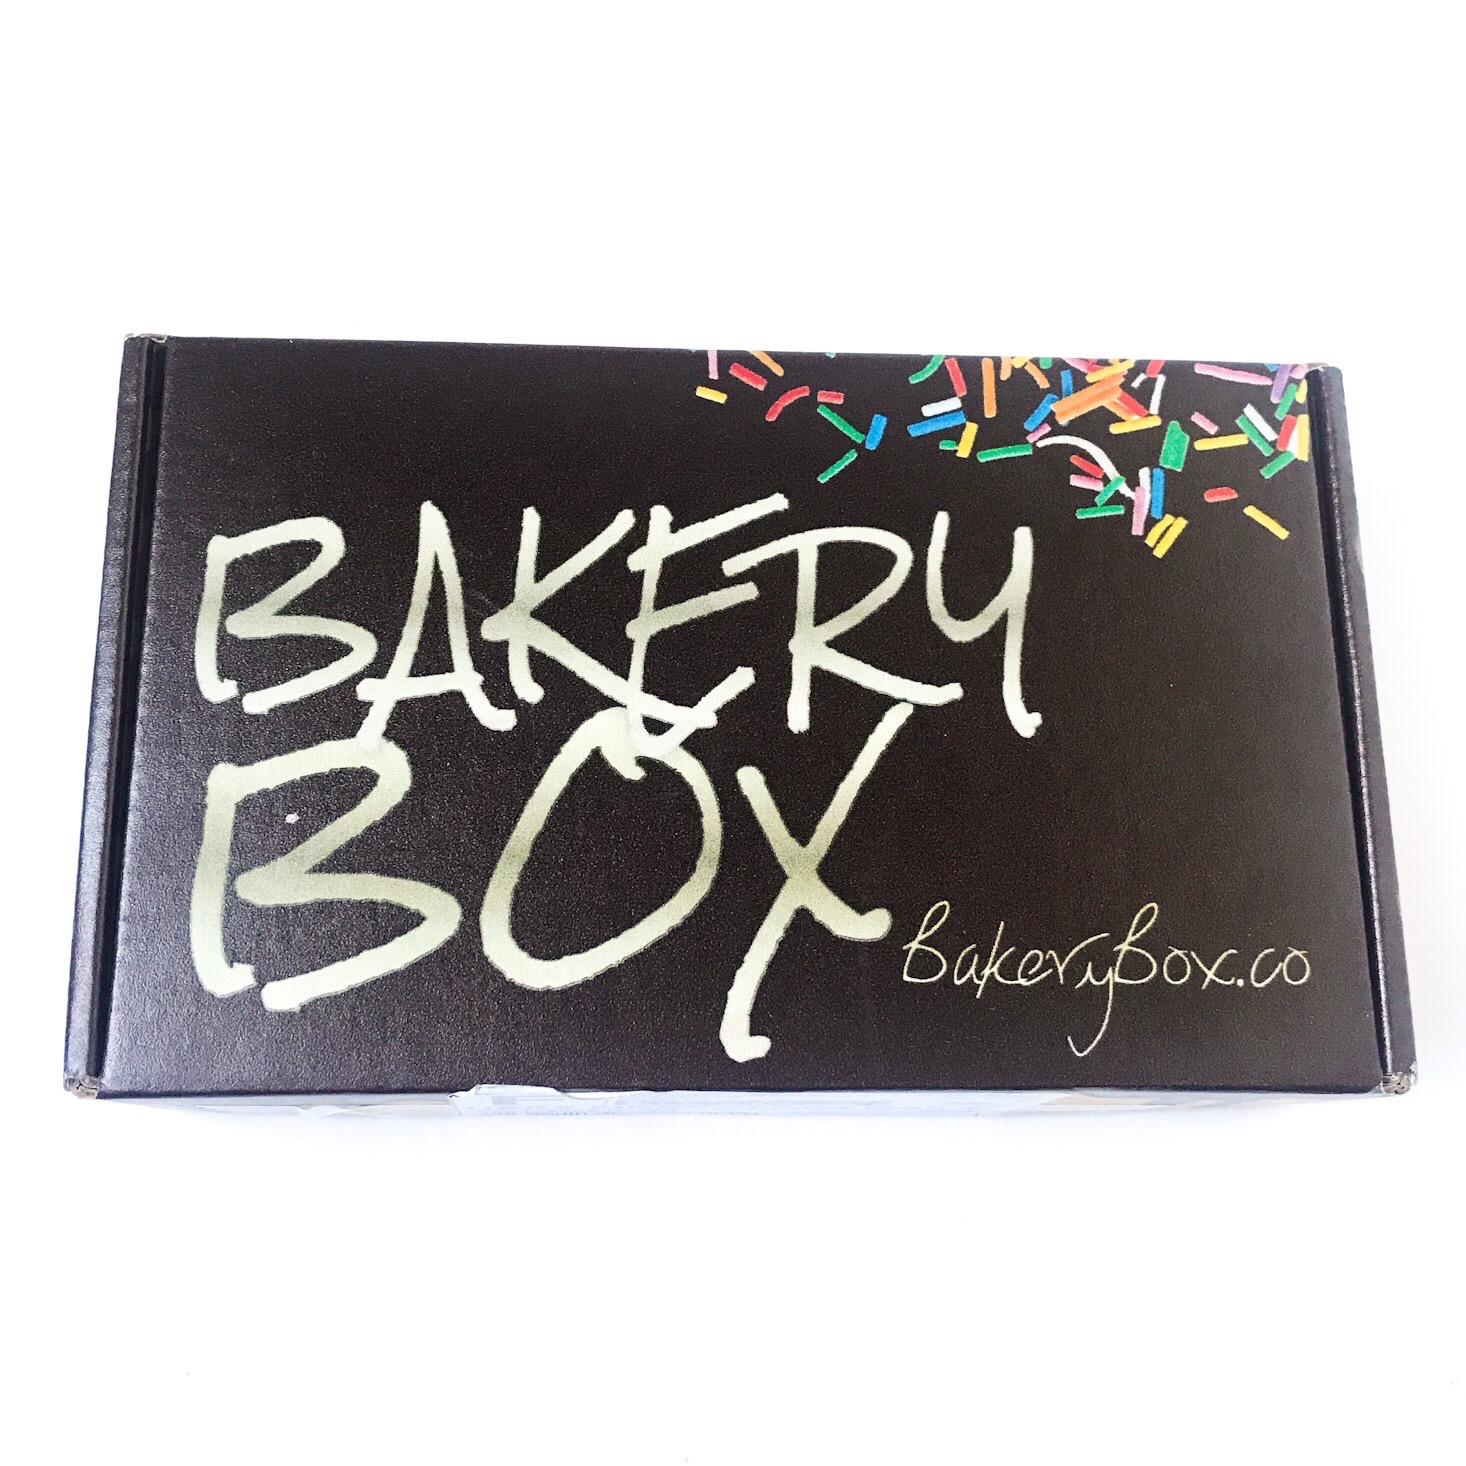 The Bakery Box by Shea Shea Bakery Review – October 2018